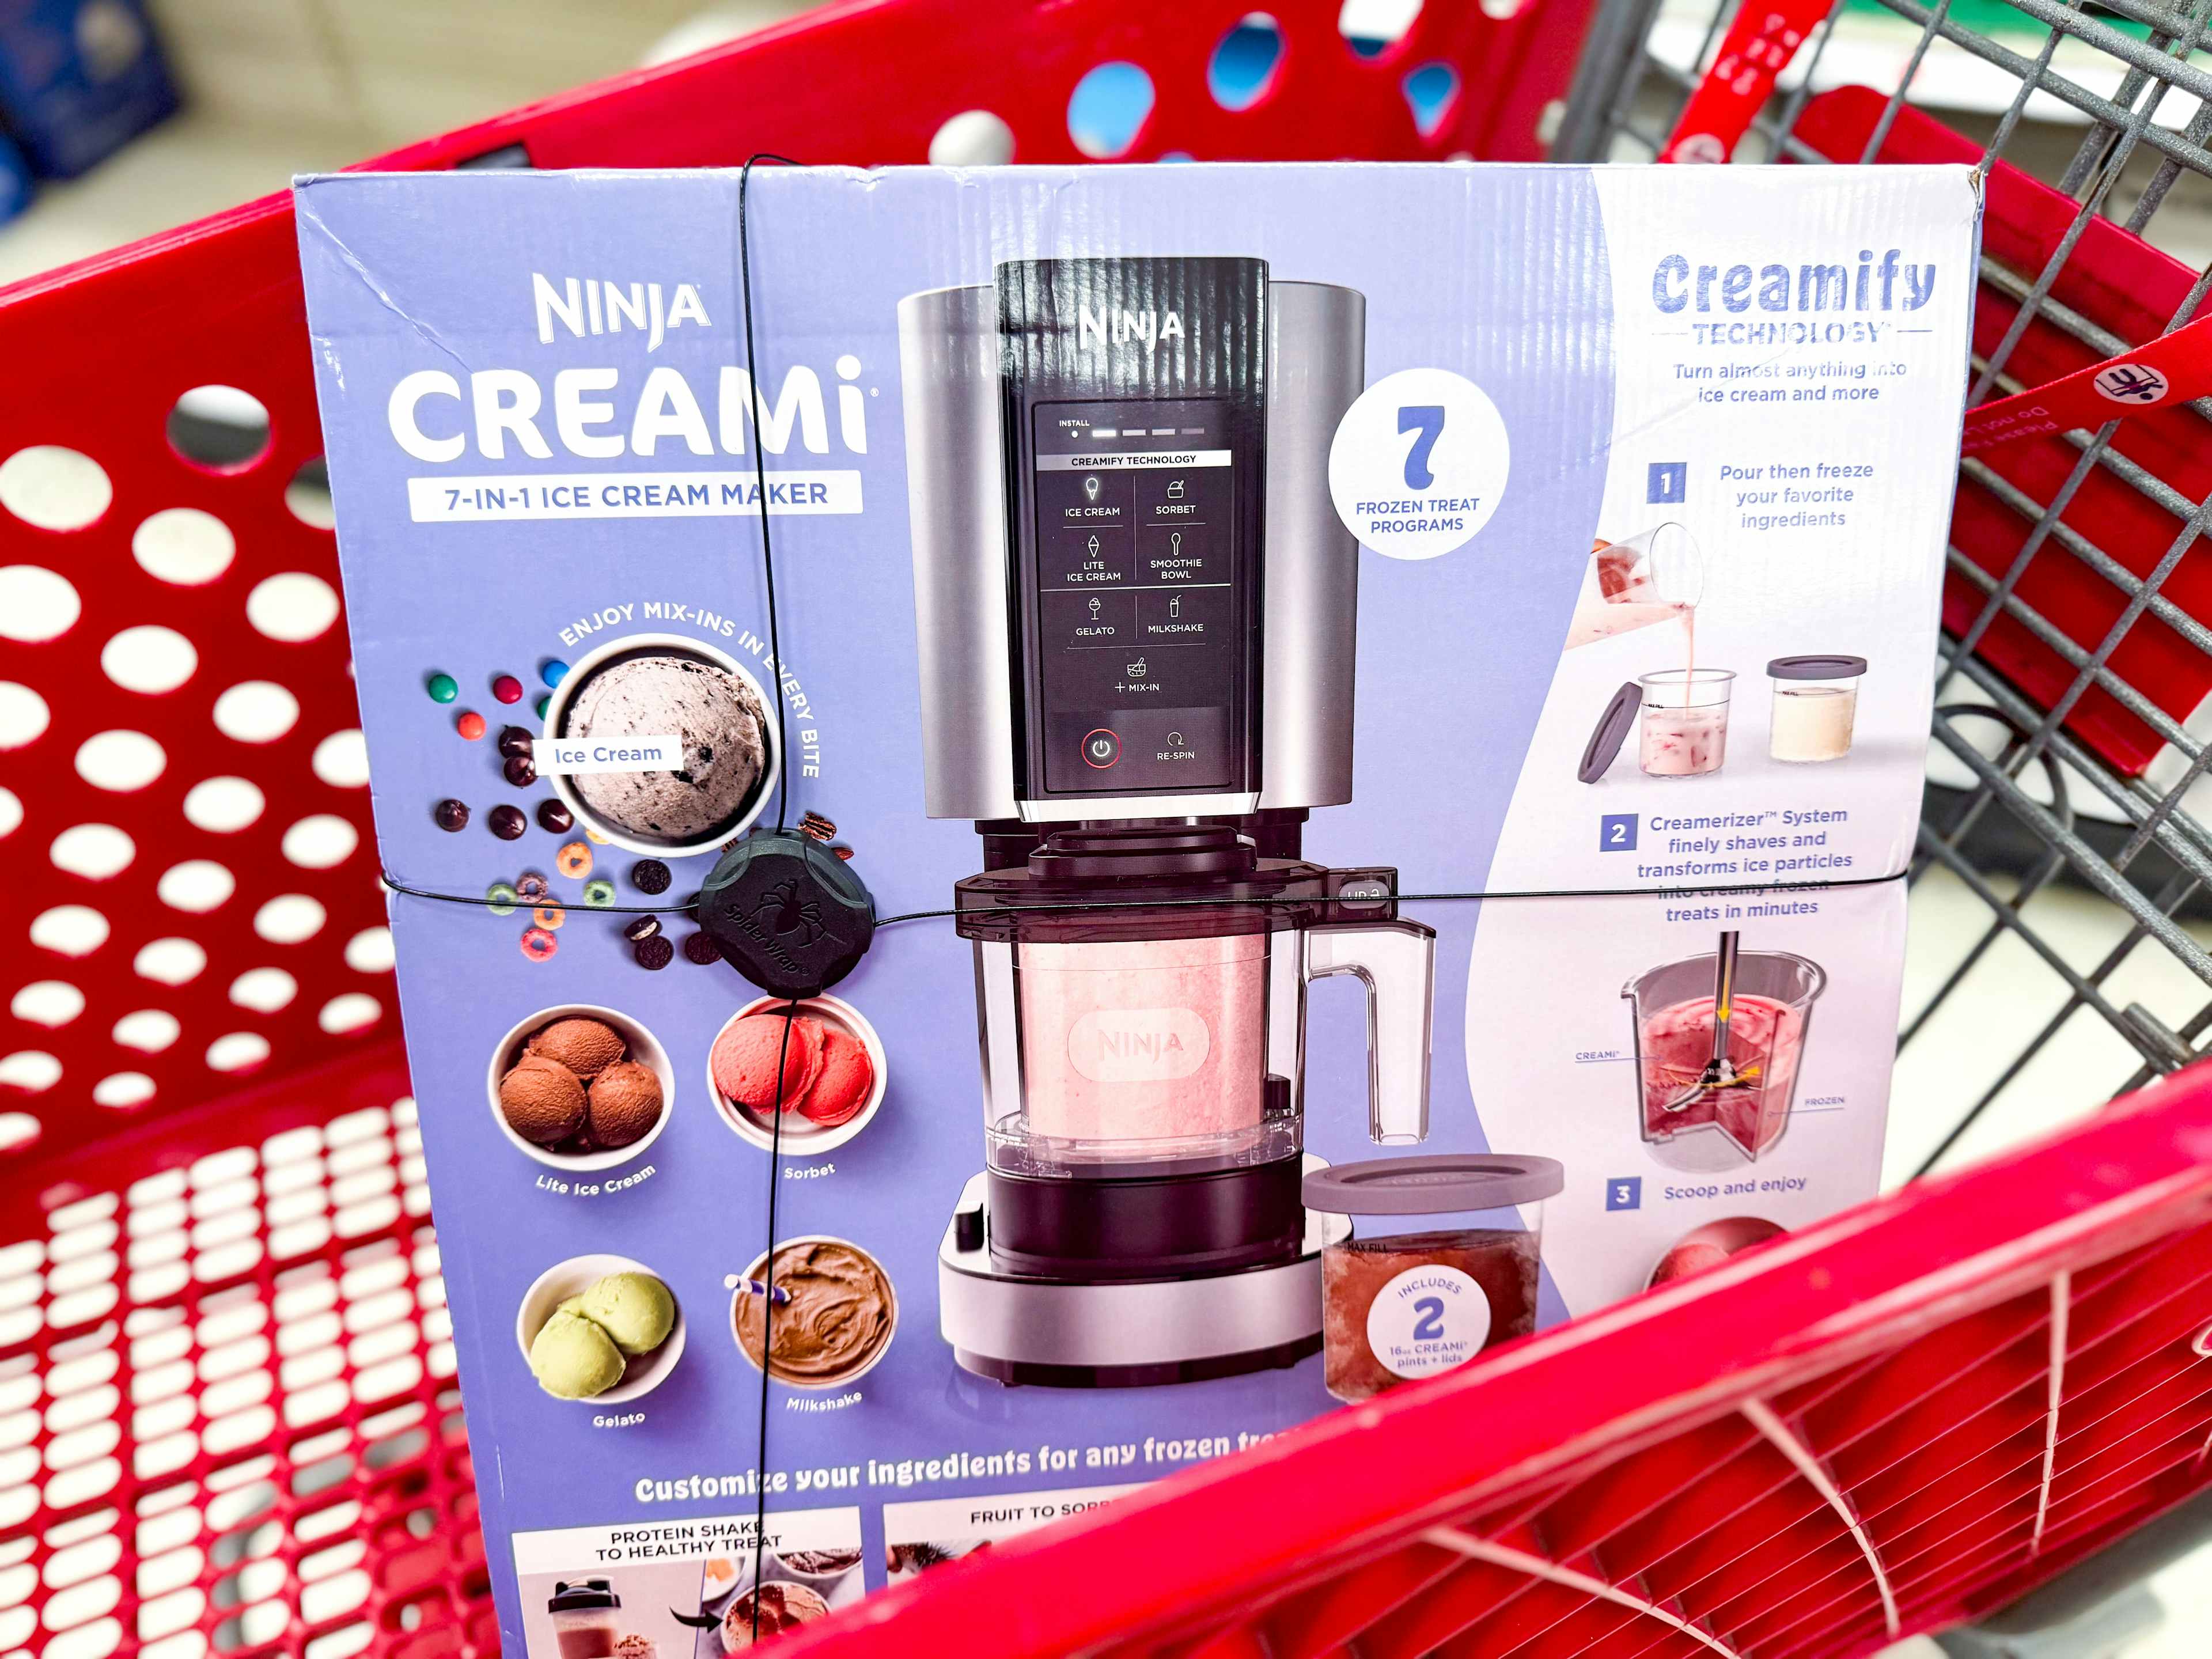 ninja-creami-ice-cream-maker-target2